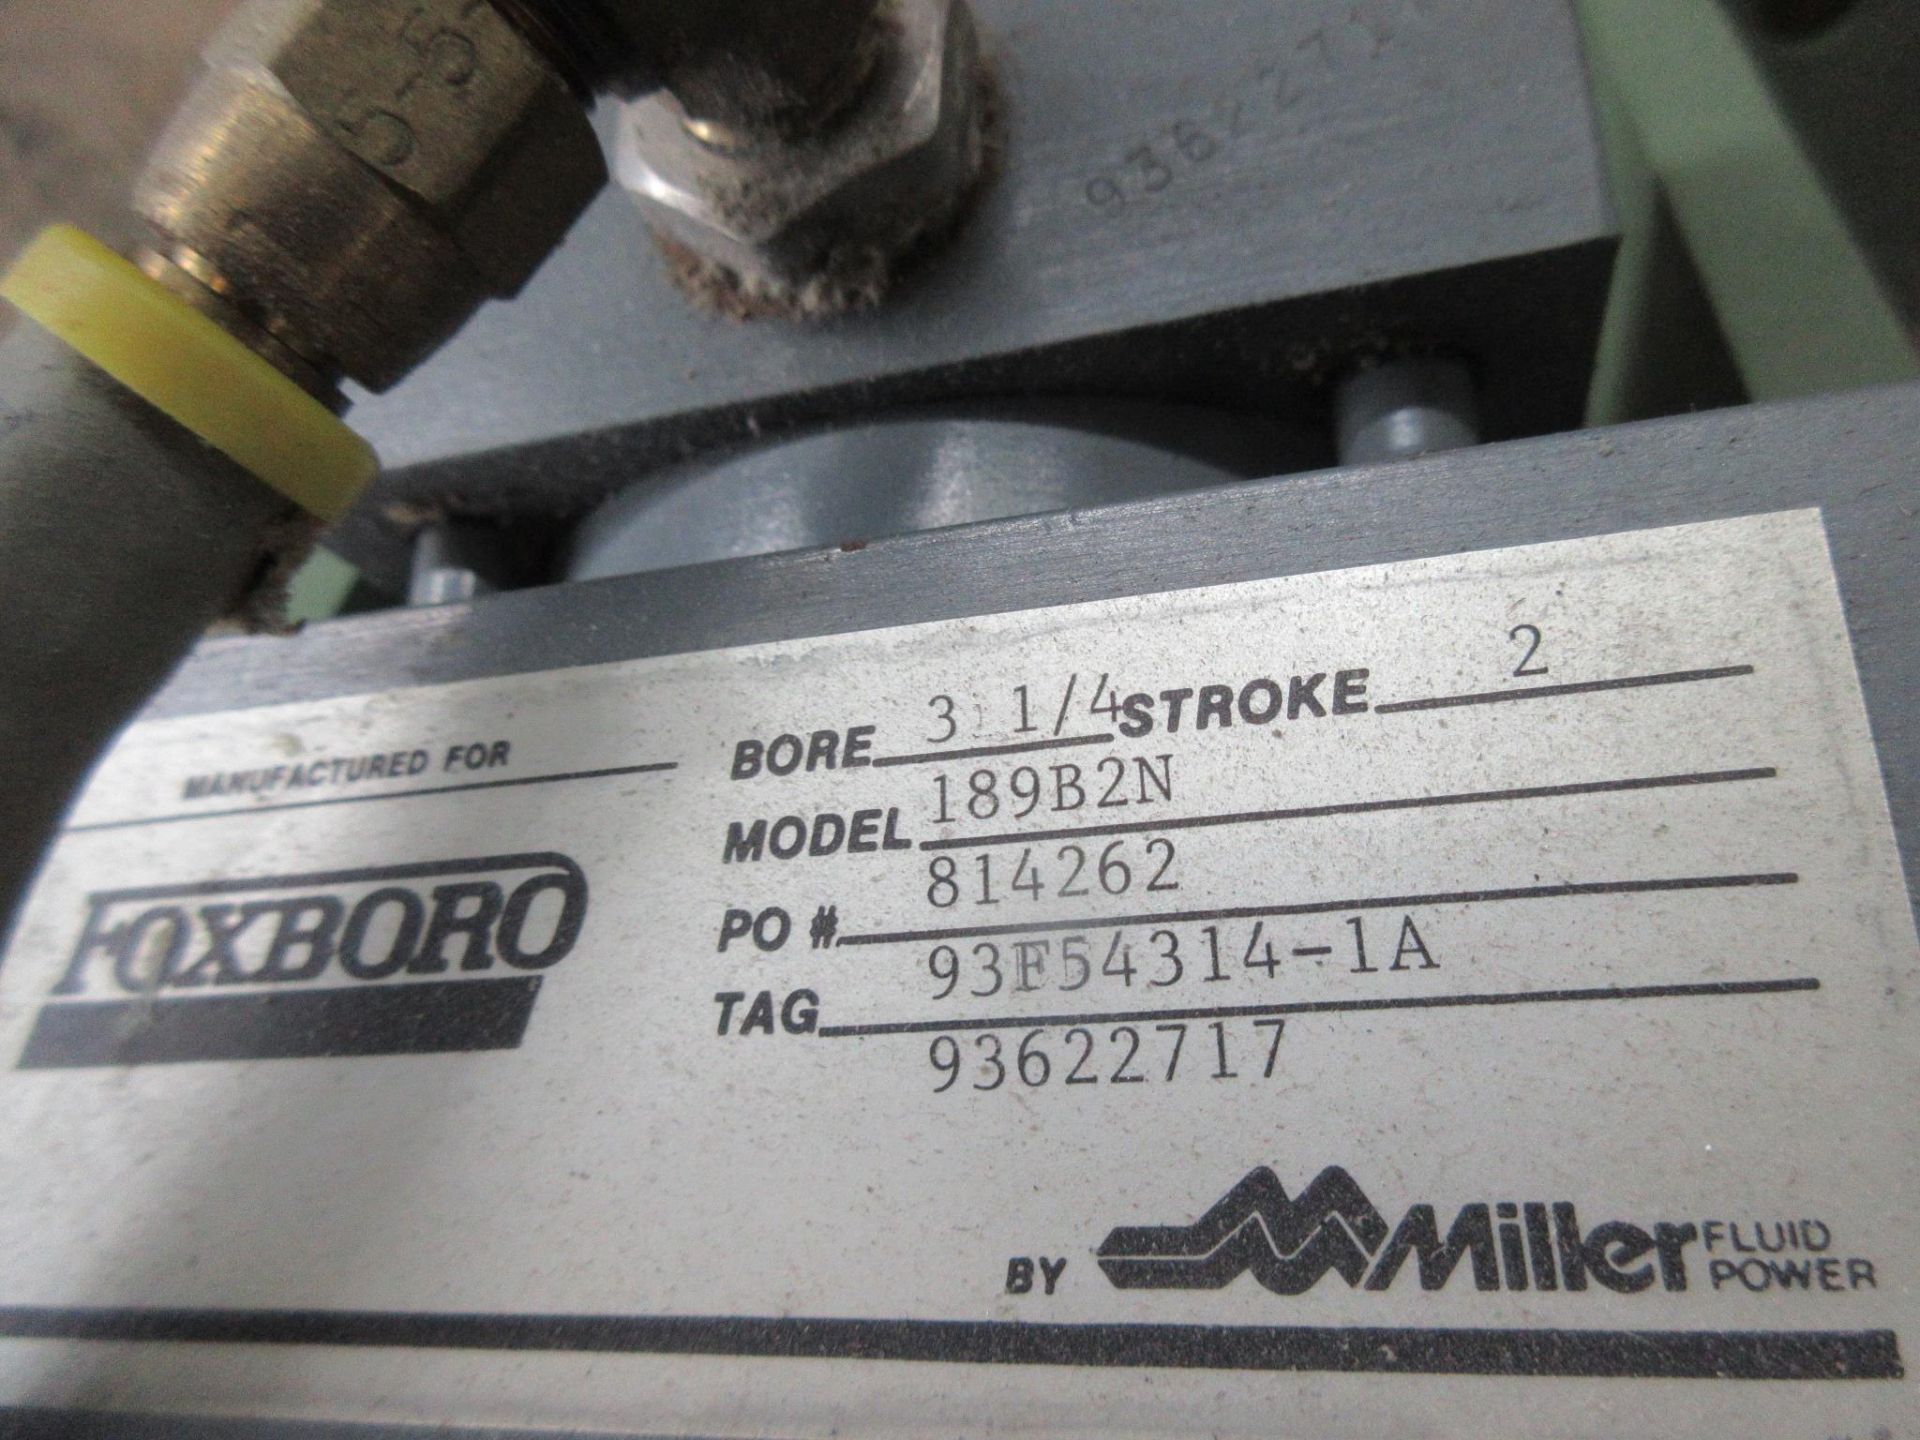 LOT OF (3) MILLER FLUID POWER / FOXBORO MODEL A89B2N ON PALLET (SOUTHWEST WAREHOUSE) - Image 4 of 4